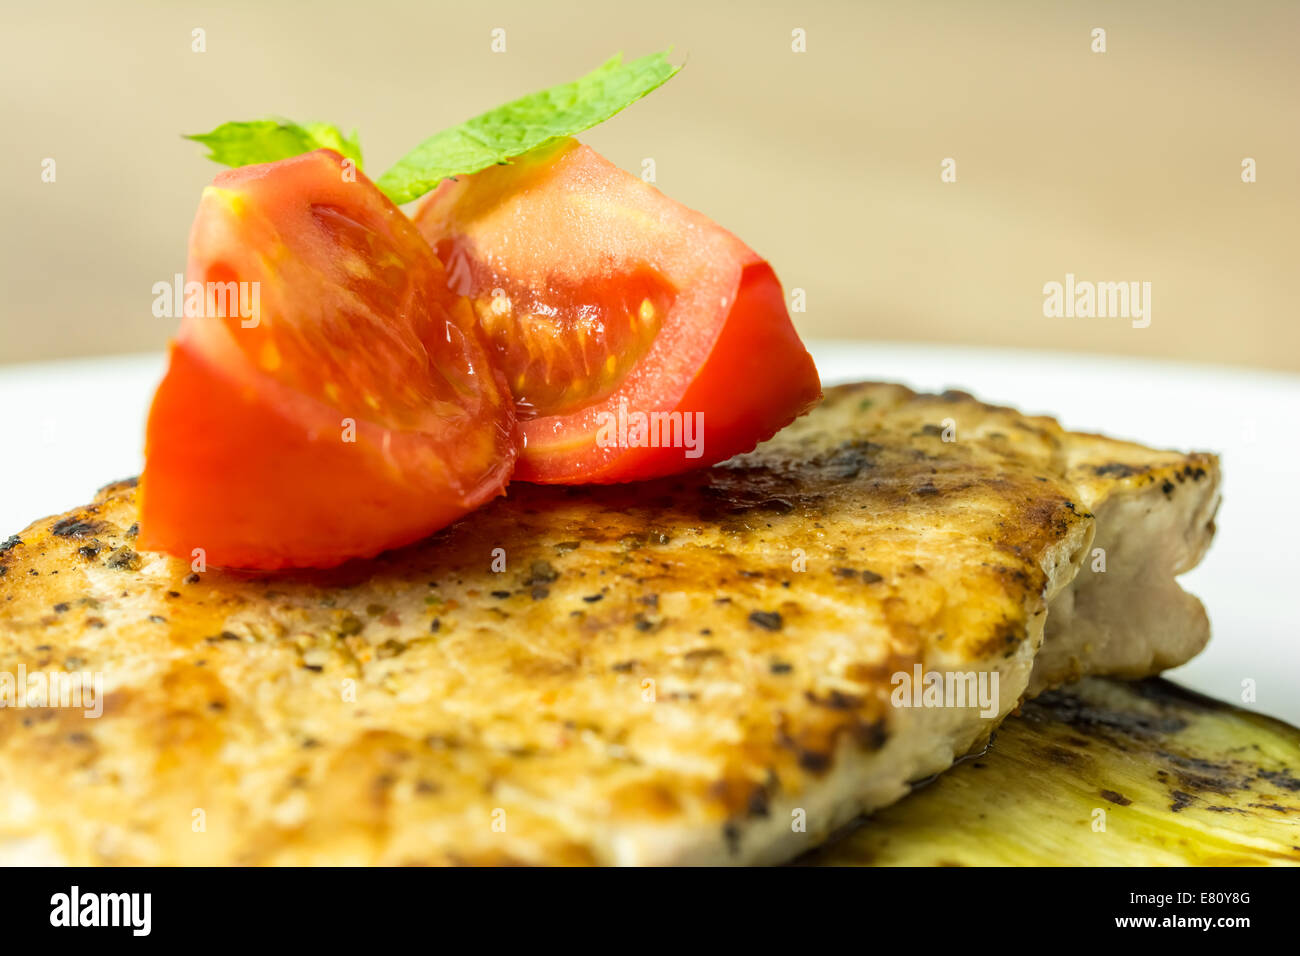 Grigliata di melanzane fetta con bistecca di carne di maiale e i pomodori tagliati a fette Foto Stock